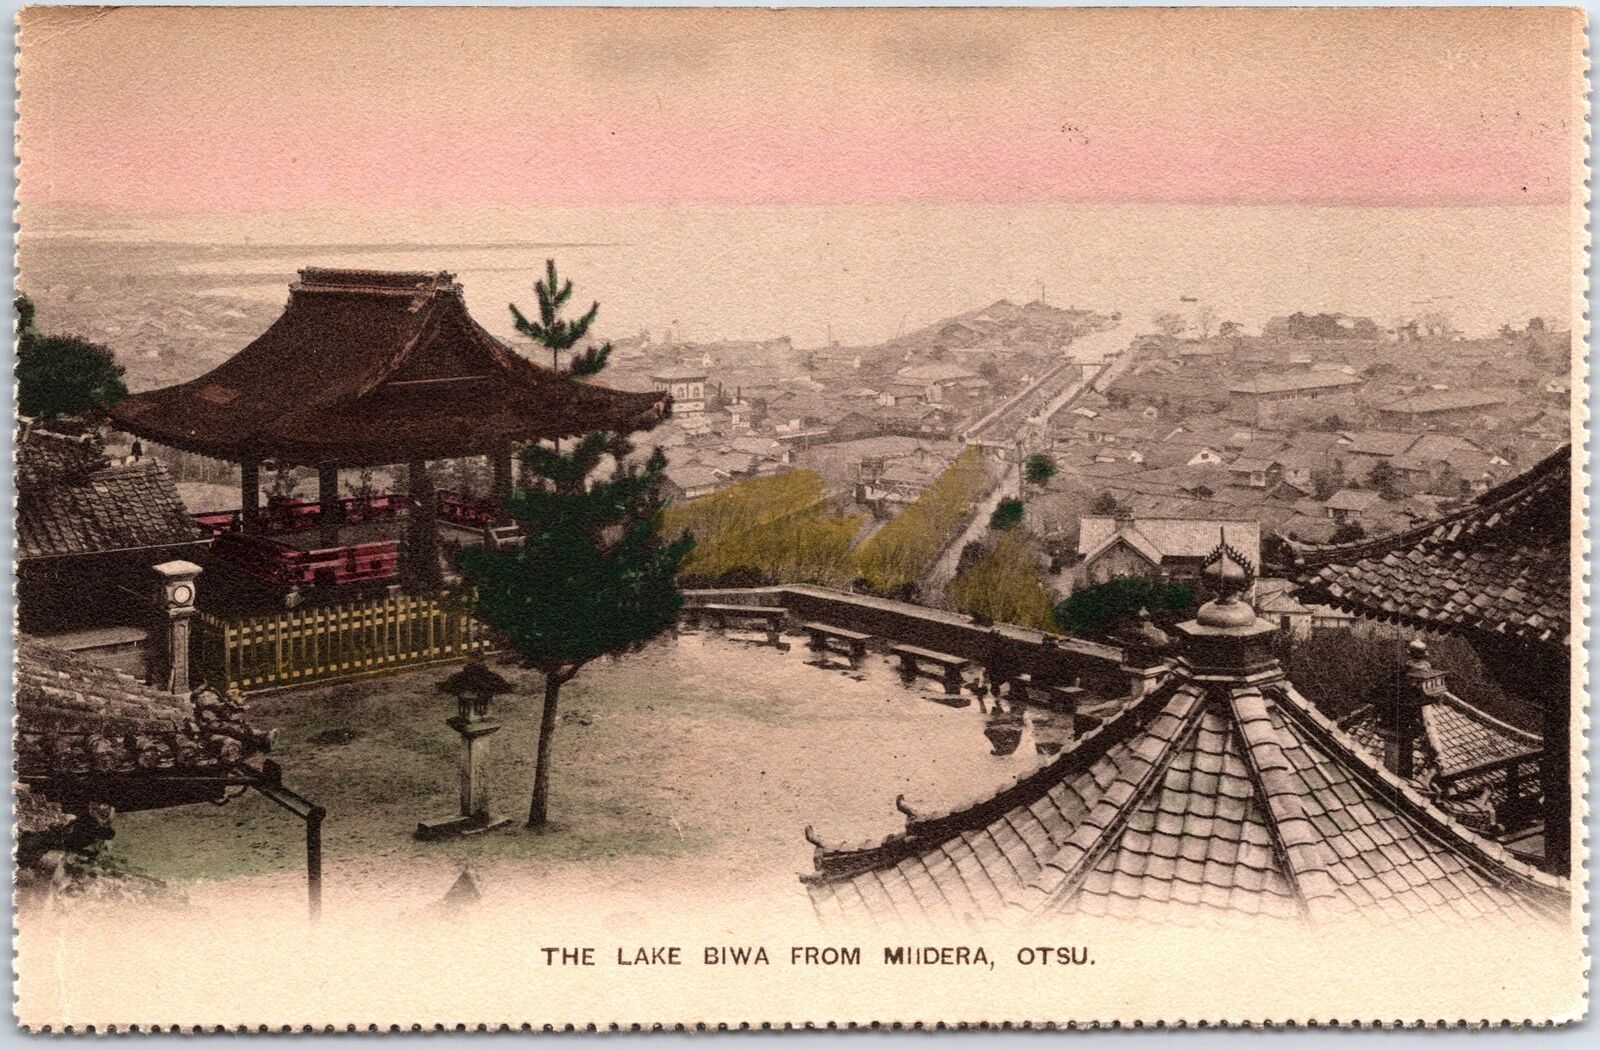 VINTAGE POSTCARD VIEW OF LAKE BIWA FROM BHUDDIST TEMPLE MII-DERA OTSU JAPAN 1910